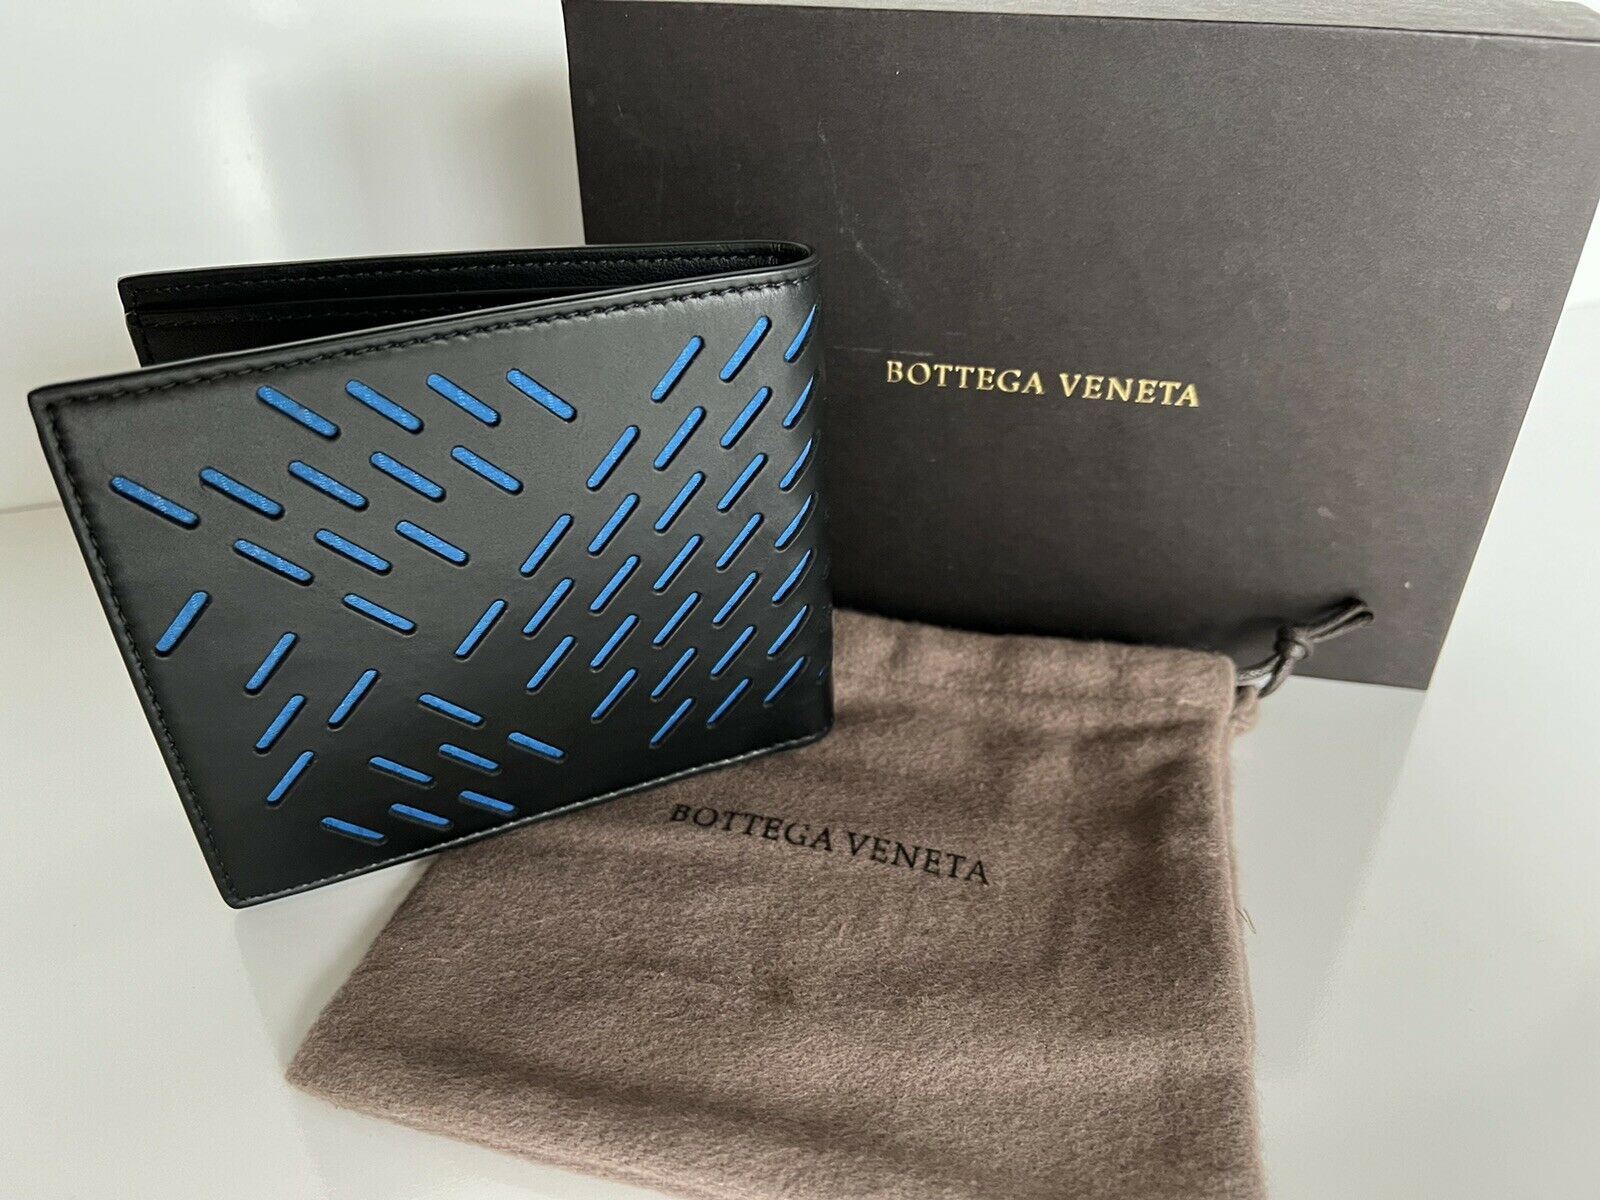 NWT $460 Bottega Veneta Perforated Leather BiFold Wallet Black/Blue 113993 Italy